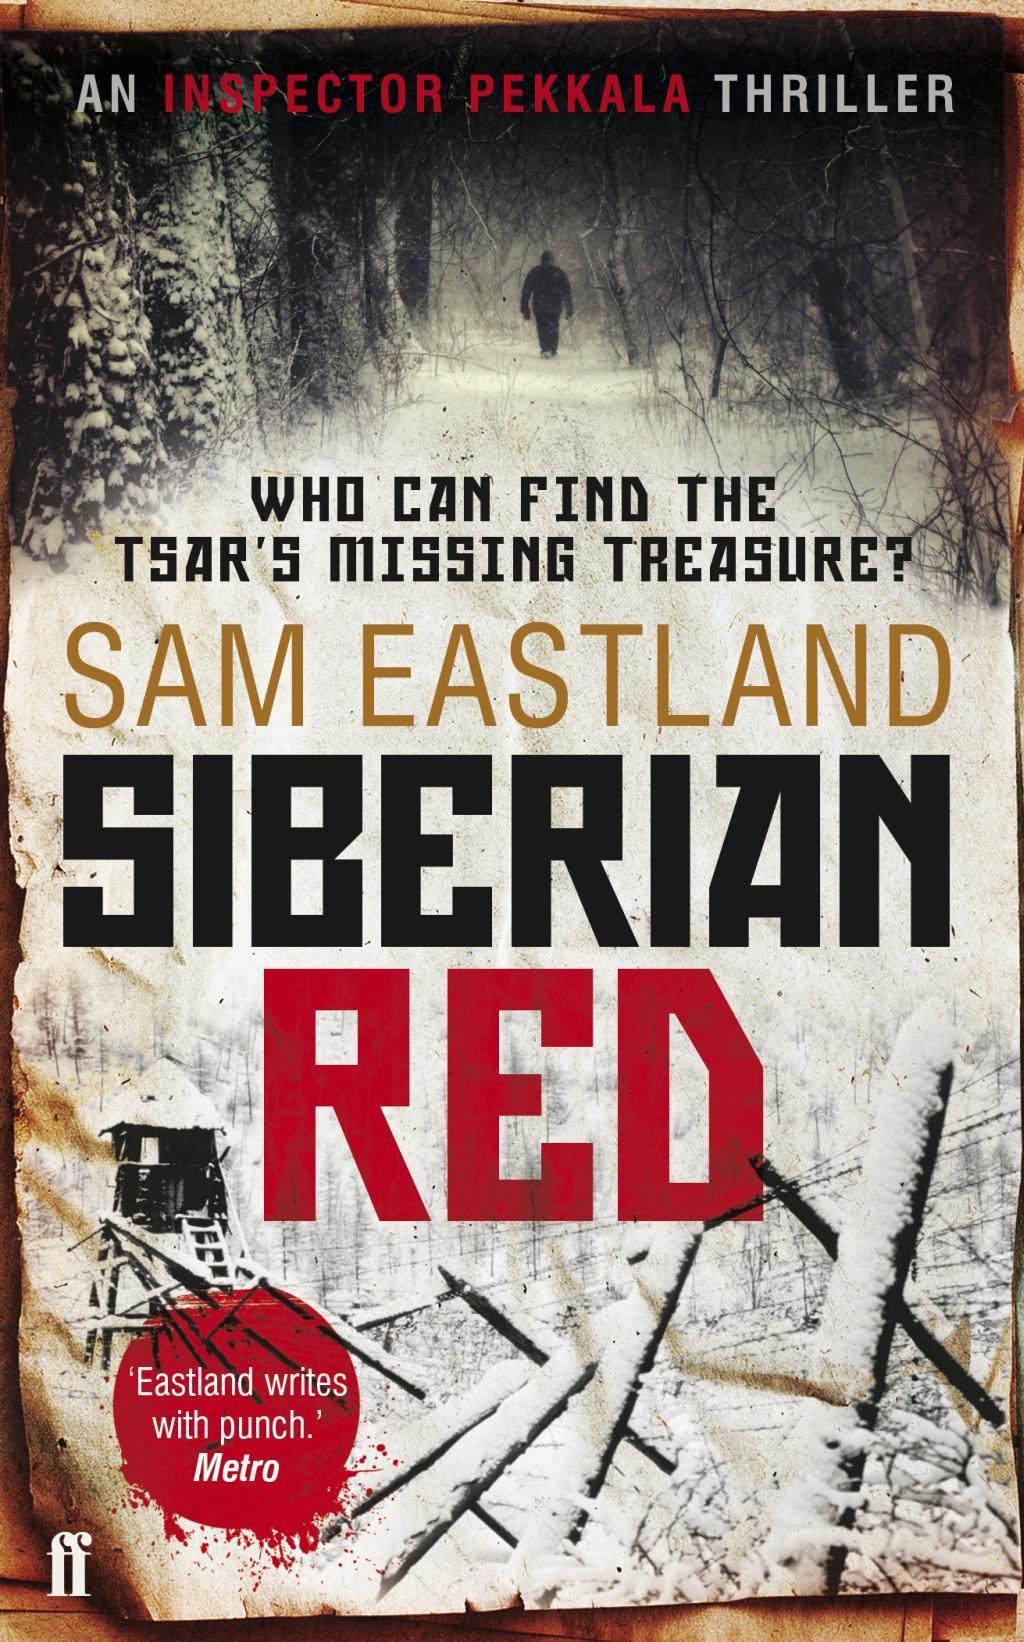 Siberian Red - Eastland, Sam